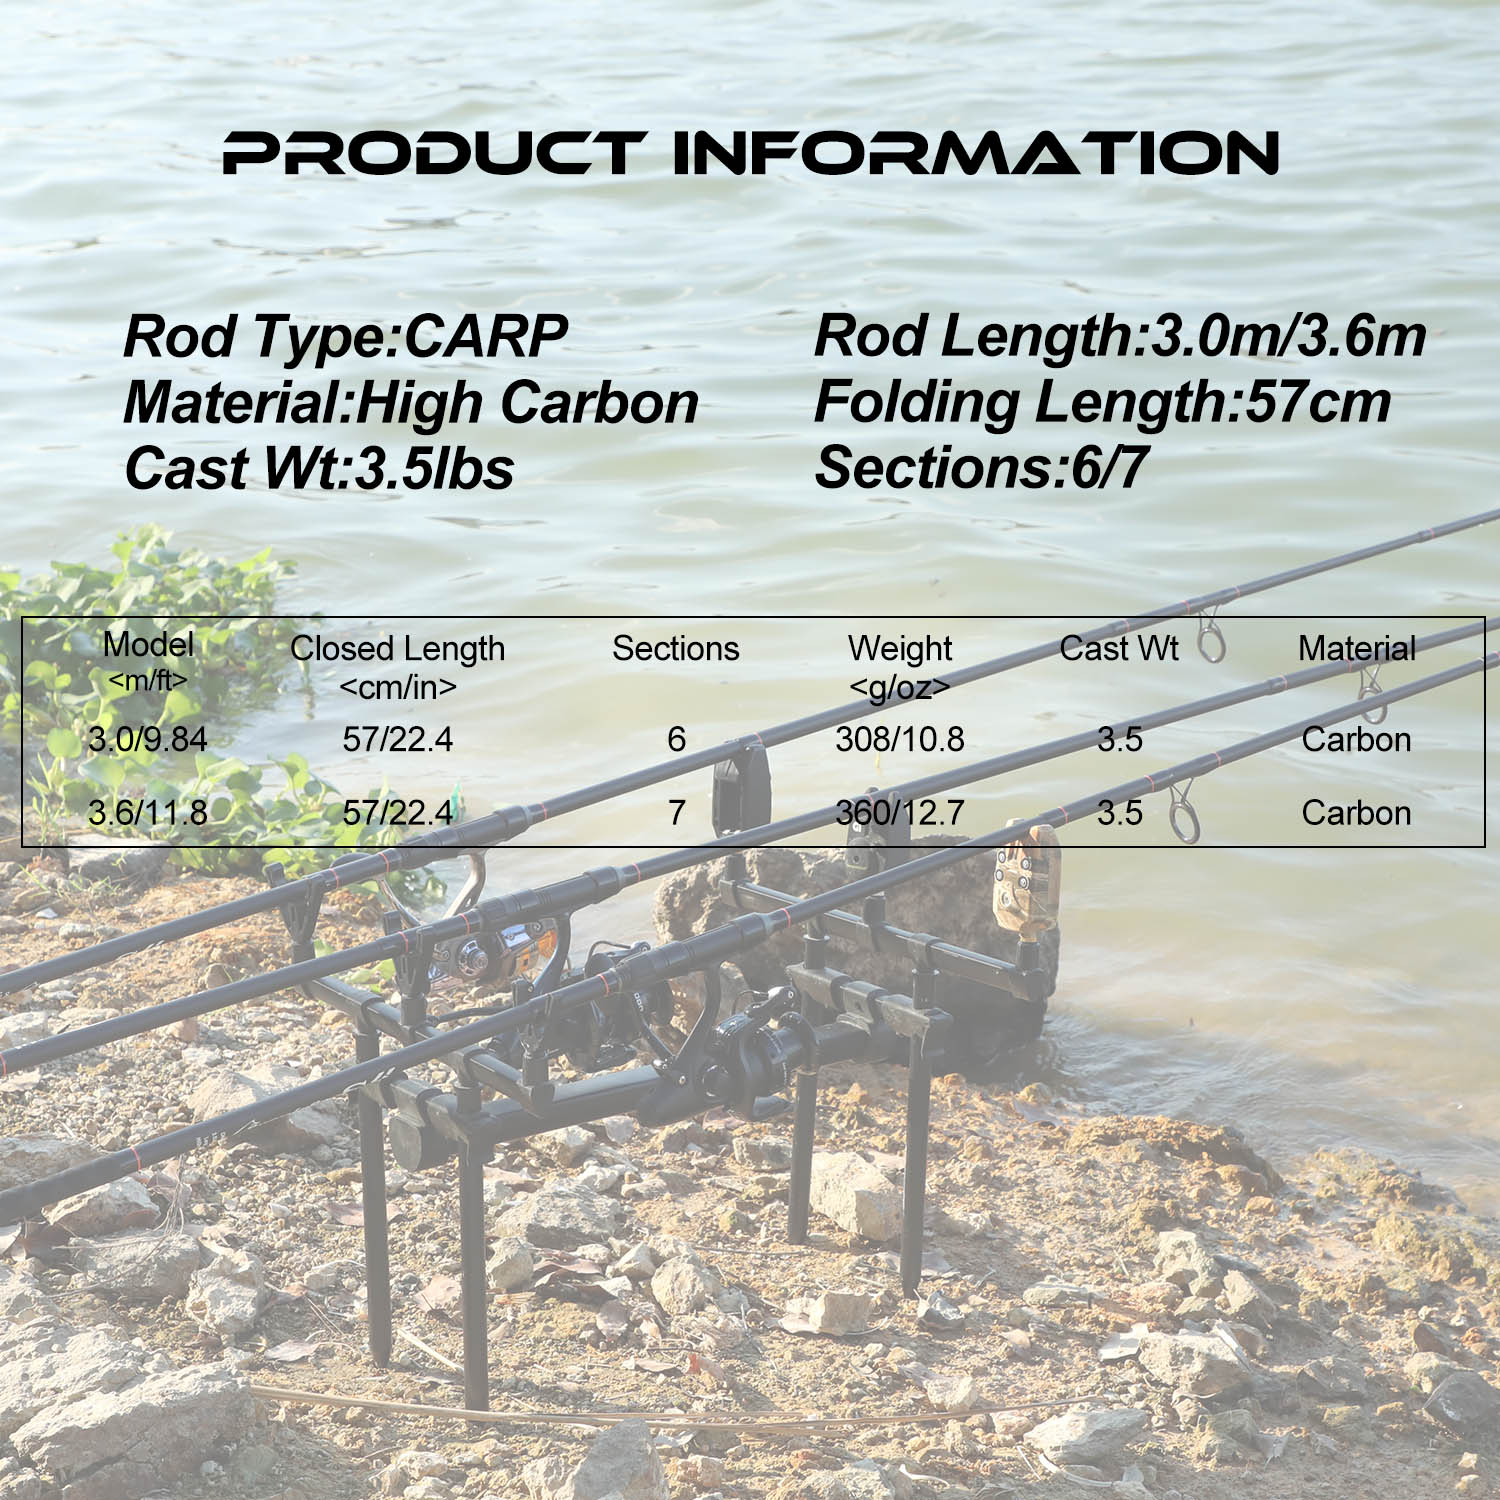 Sougayilang 3m 3.6m Top Quality Carbon Fiber Carp Fishing Rod Portable 3.5LB 6/7 Section Spinning Feeder Rod Hard Pole Pesca